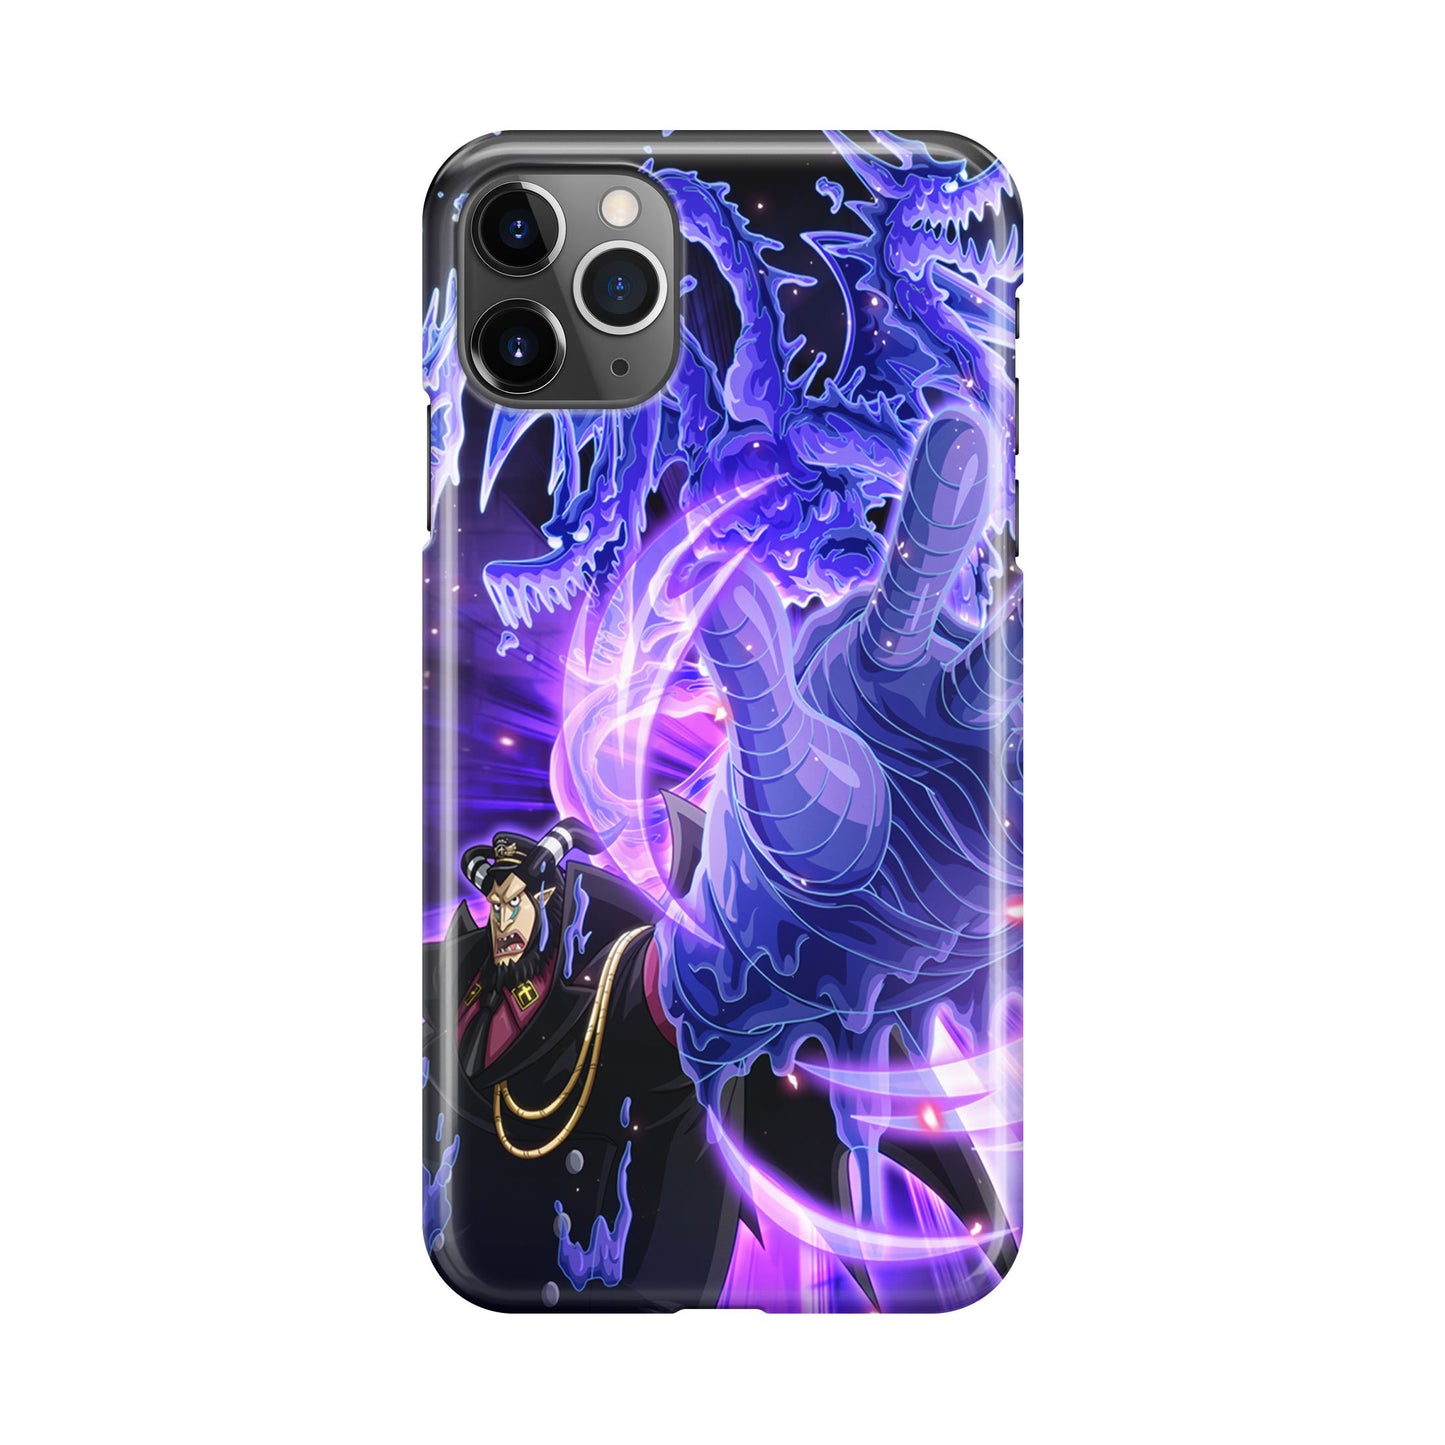 Magellan Hydra Poison Dragon iPhone 11 Pro Case